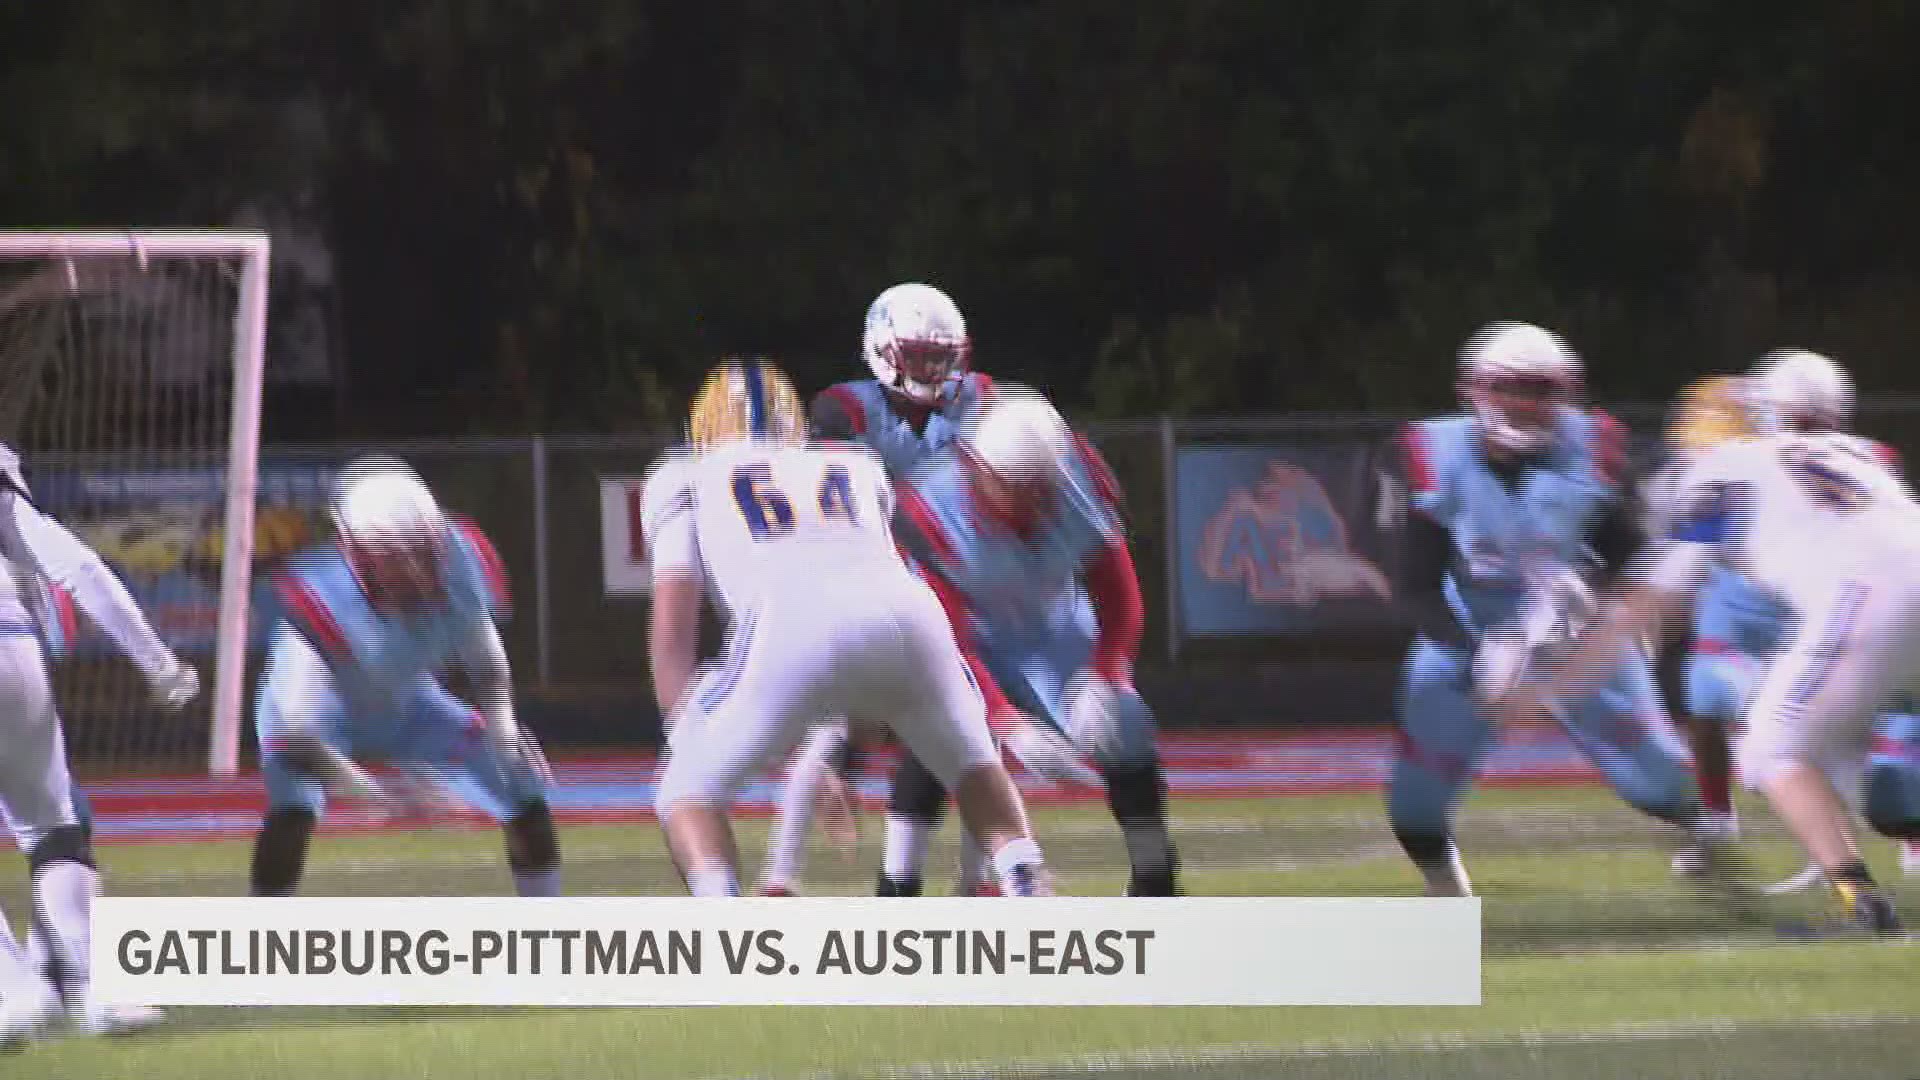 Austin-East knocks off Gatlinburg-Pittman, 54-6.